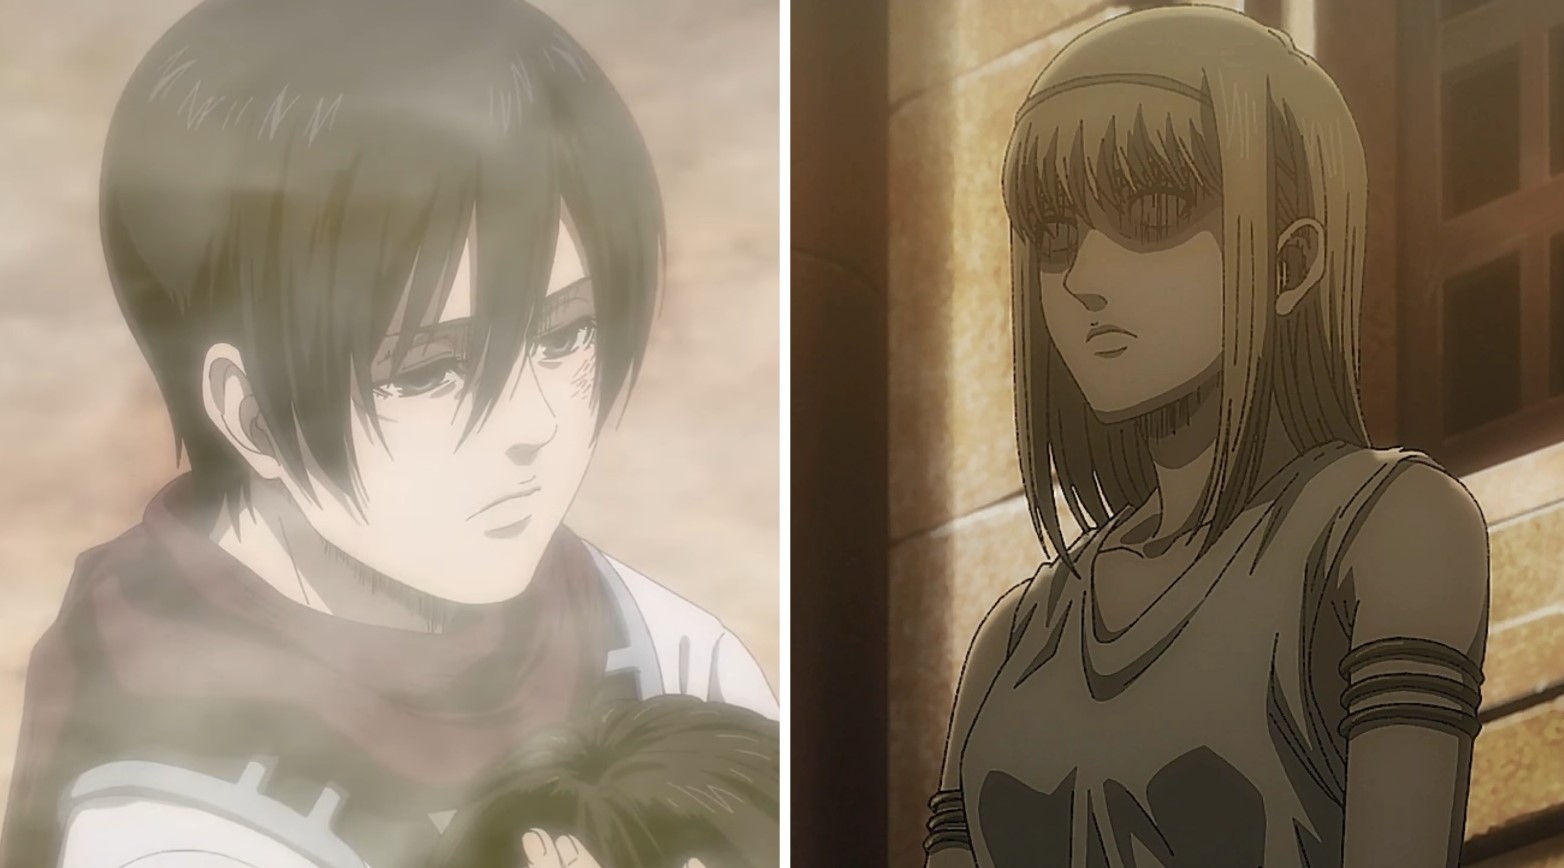 Mikasa and Ymir